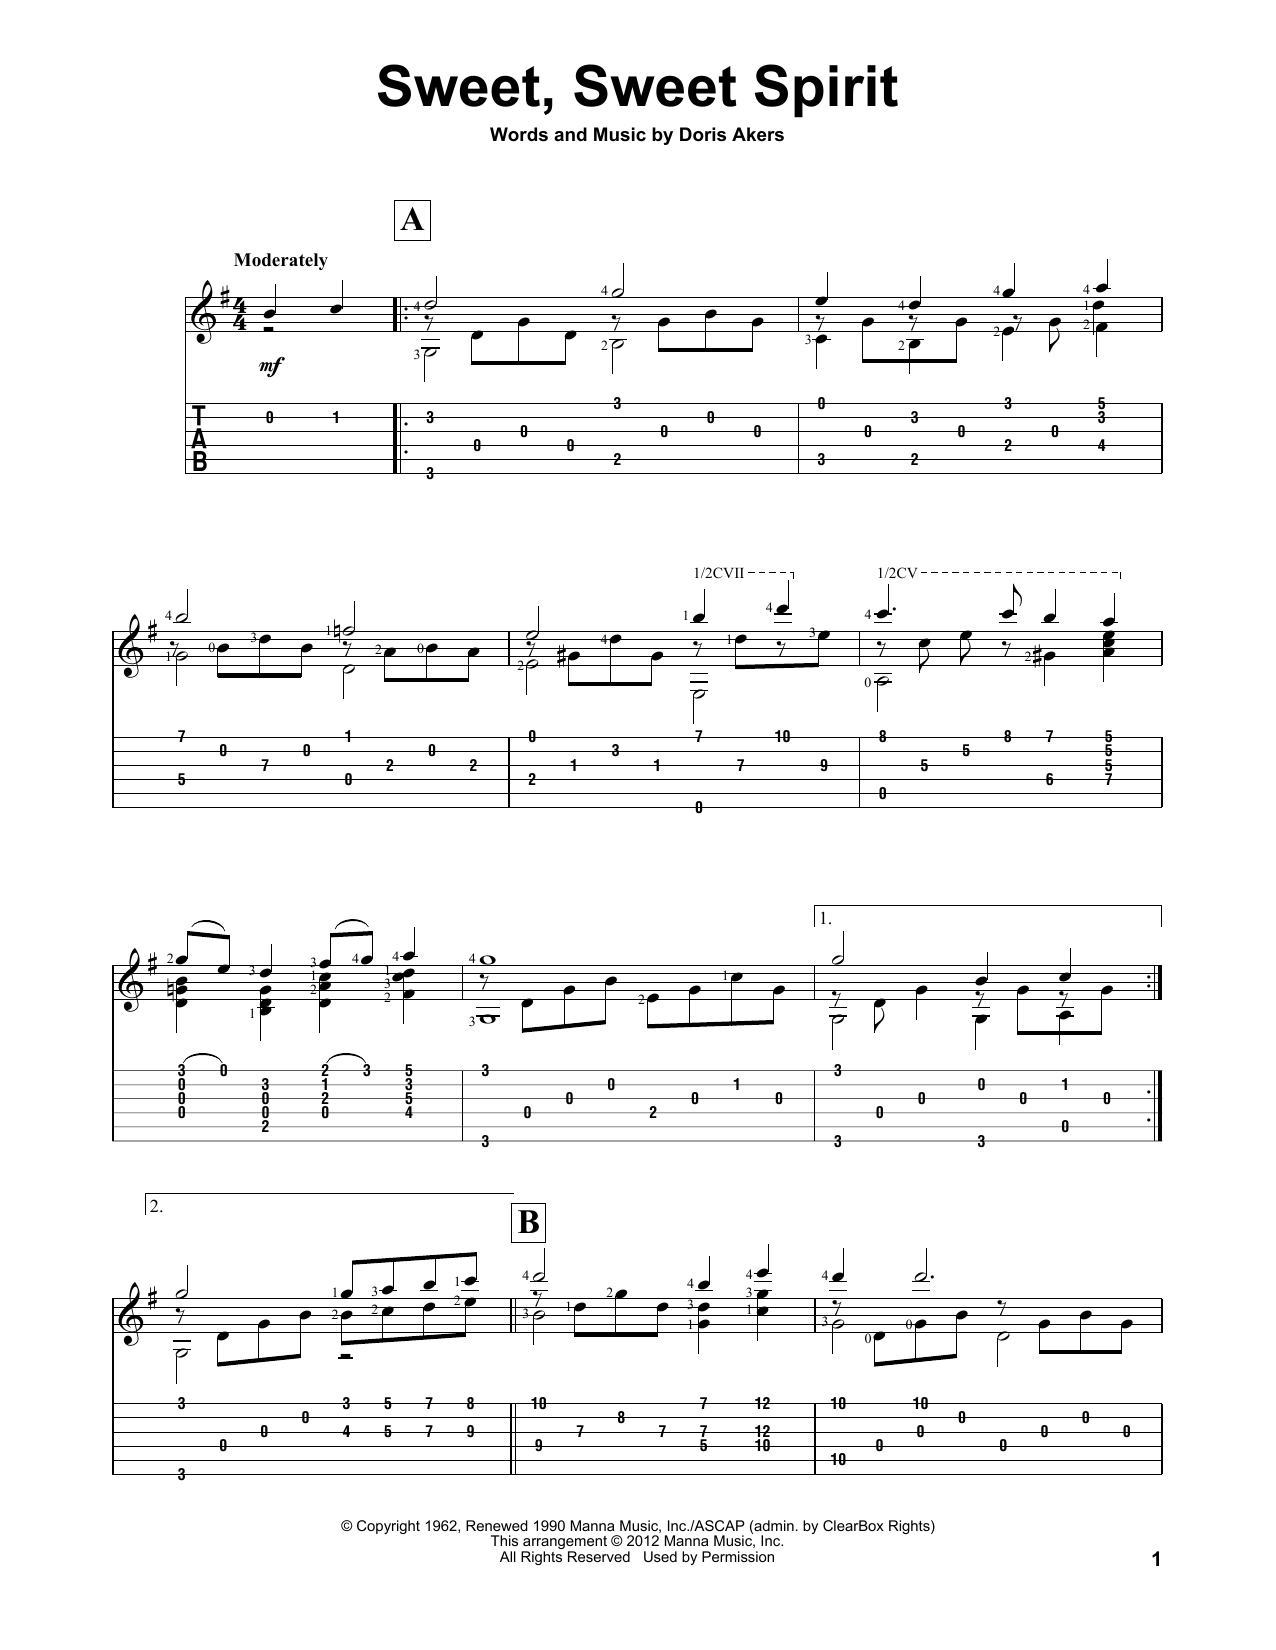 Doris Akers Sweet, Sweet Spirit Sheet Music Notes & Chords for Super Easy Piano - Download or Print PDF